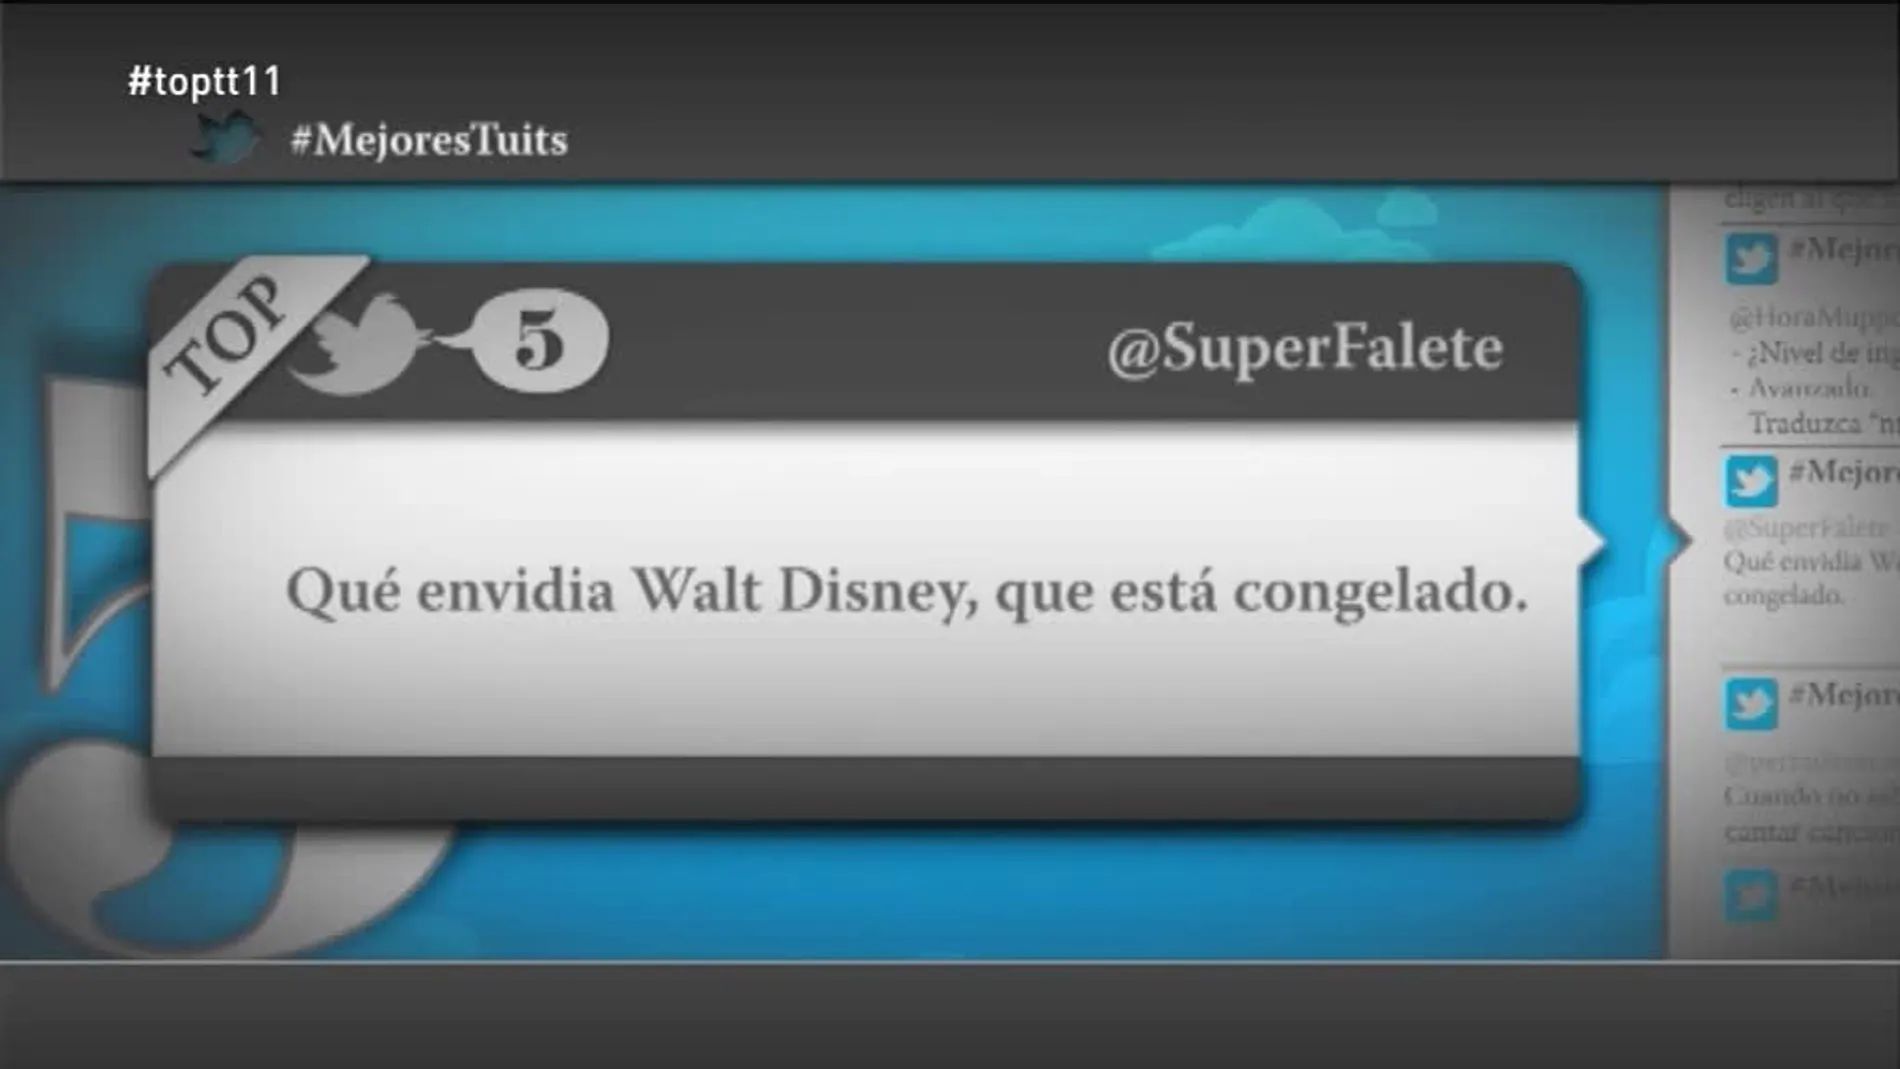 @SuperFalete: "Qué envidia Walt Disney, que está congelado"